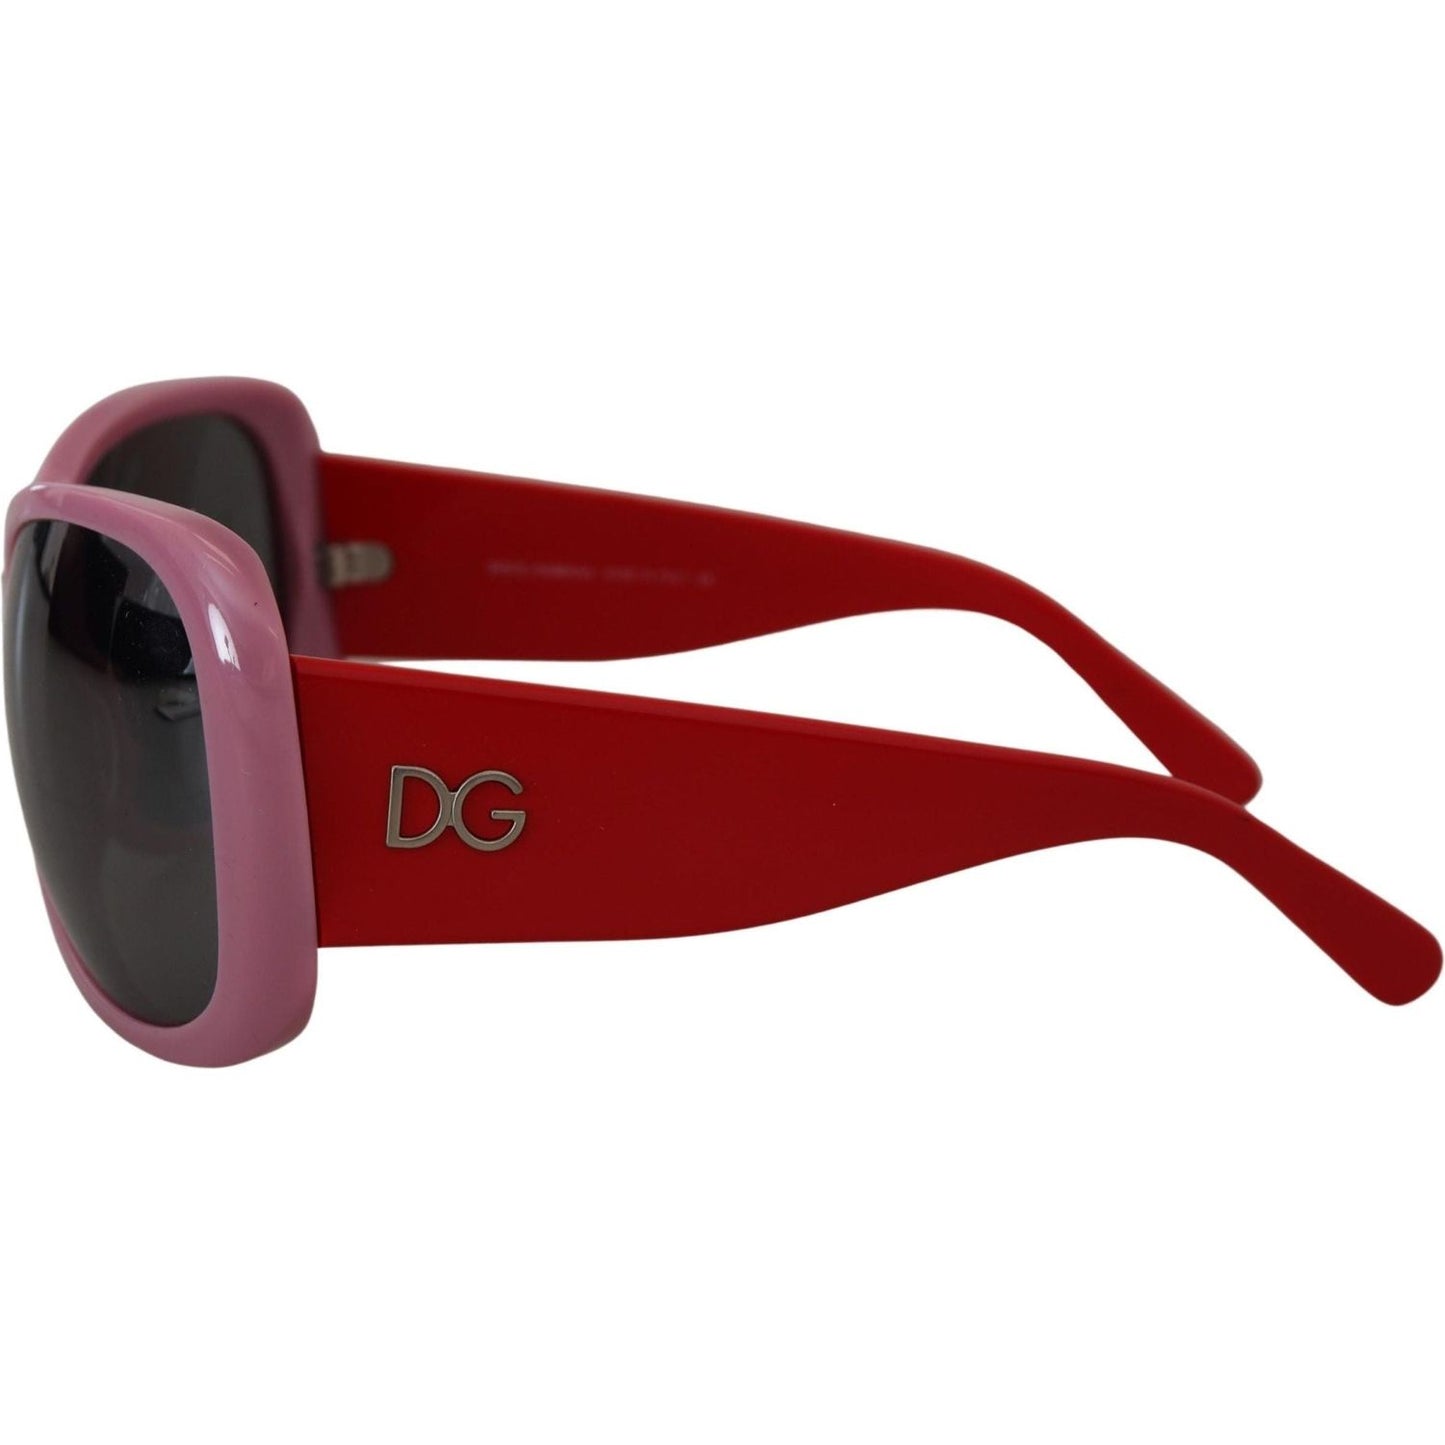 Dolce & Gabbana Chic Oversized UV-Protection Sunglasses pink-red-plastic-frame-oversized-dg4033-sunglasses IMG_4786-scaled-6aaea84b-5f4.jpg